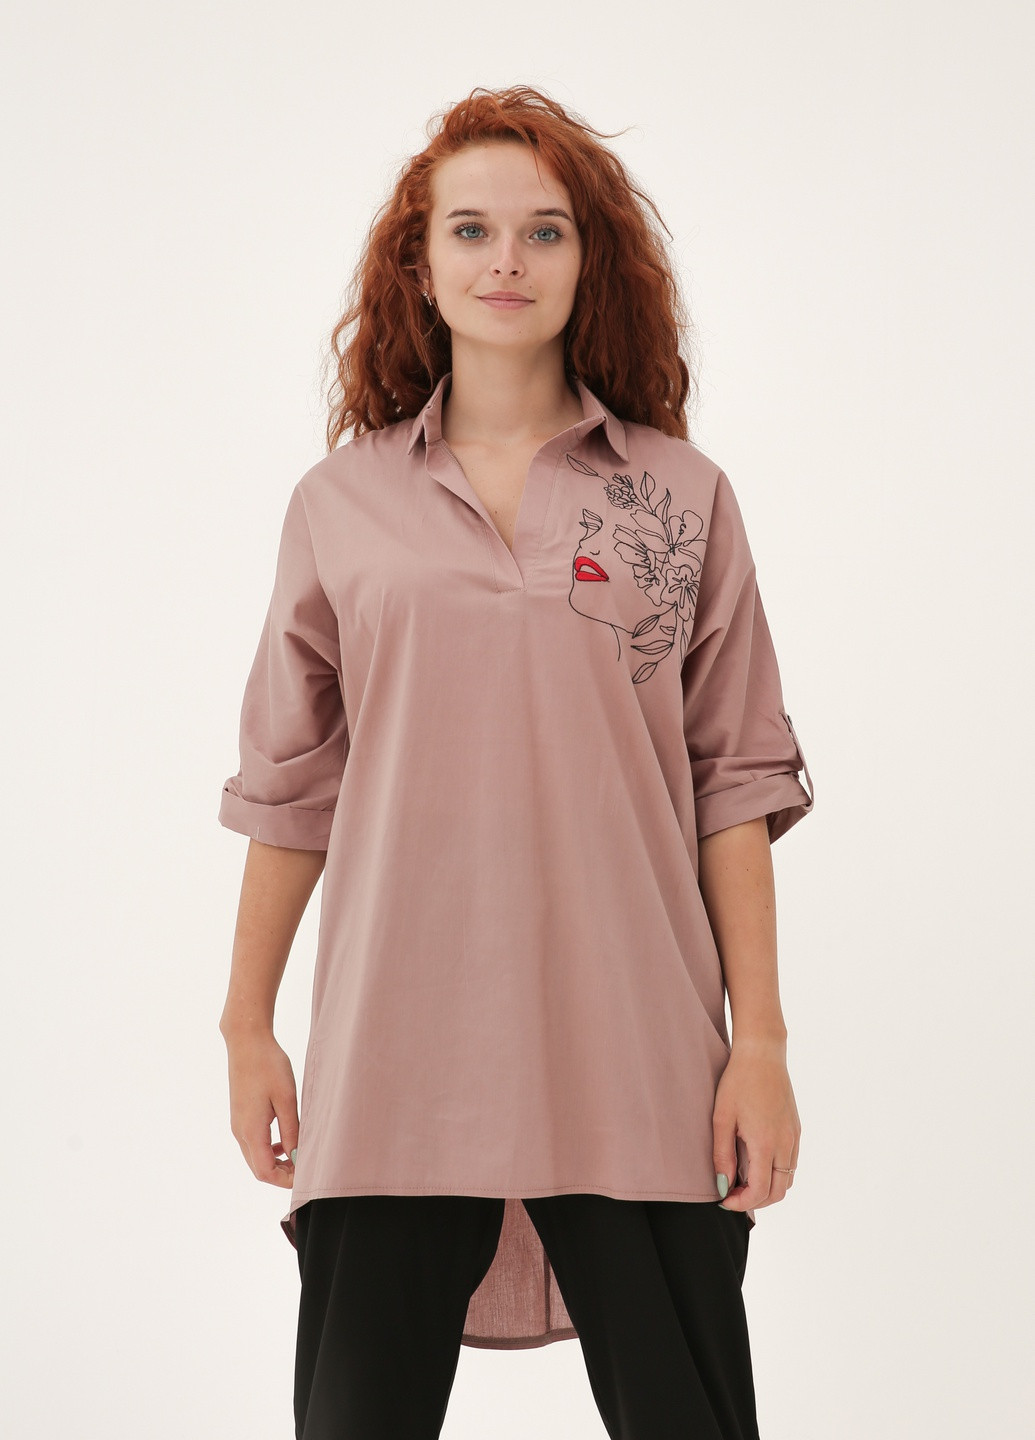 Бежевая демисезонная рубашка-туника оверсайз с модной вышивкой INNOE Блузка